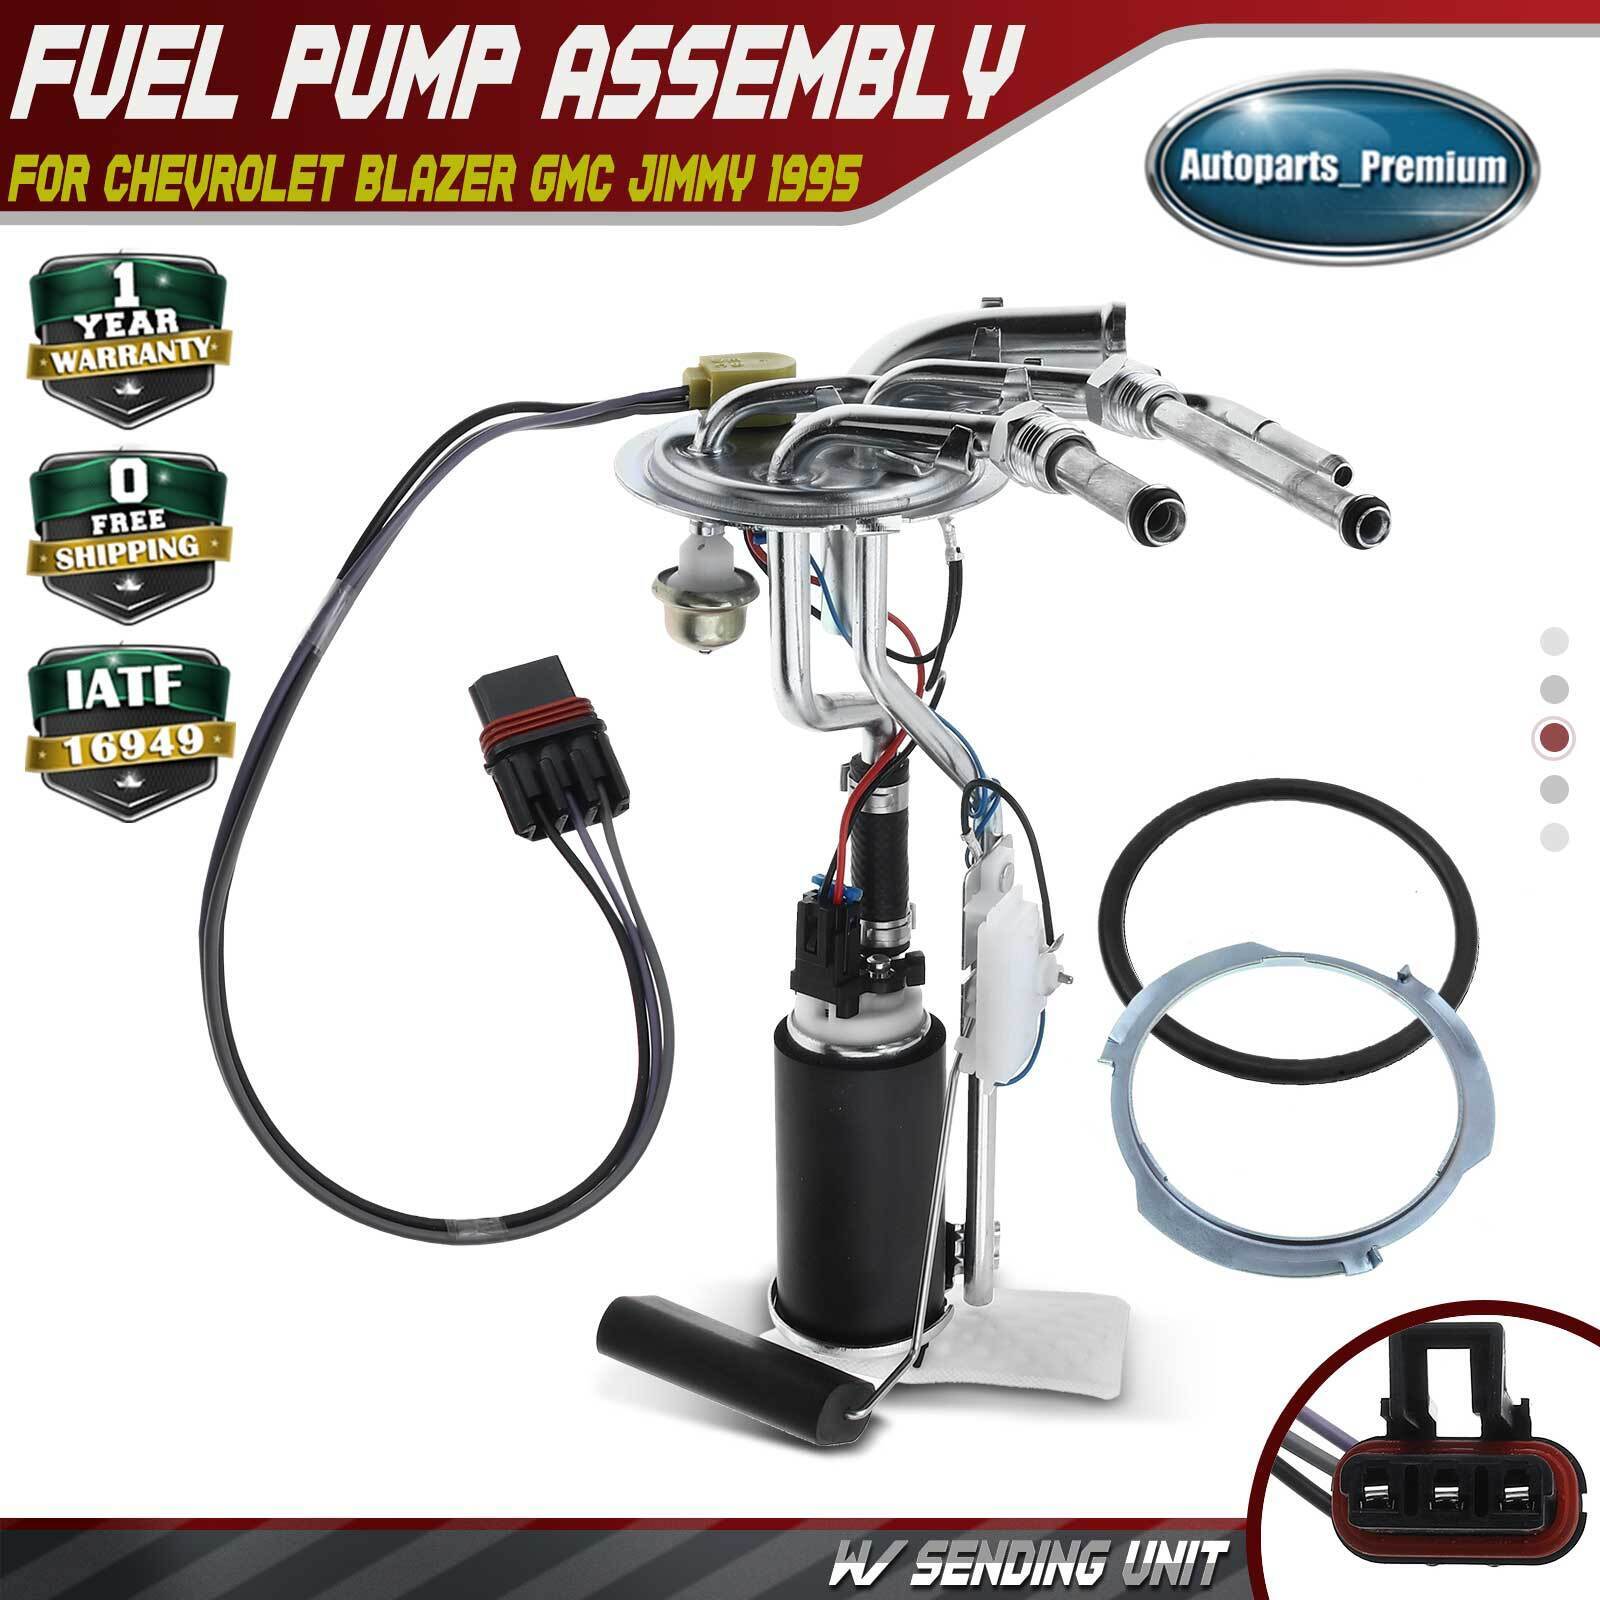 New Fuel Pump Assembly for Chevrolet Blazer GMC Jimmy 1995 V6 4.3L Petrol 2 Door